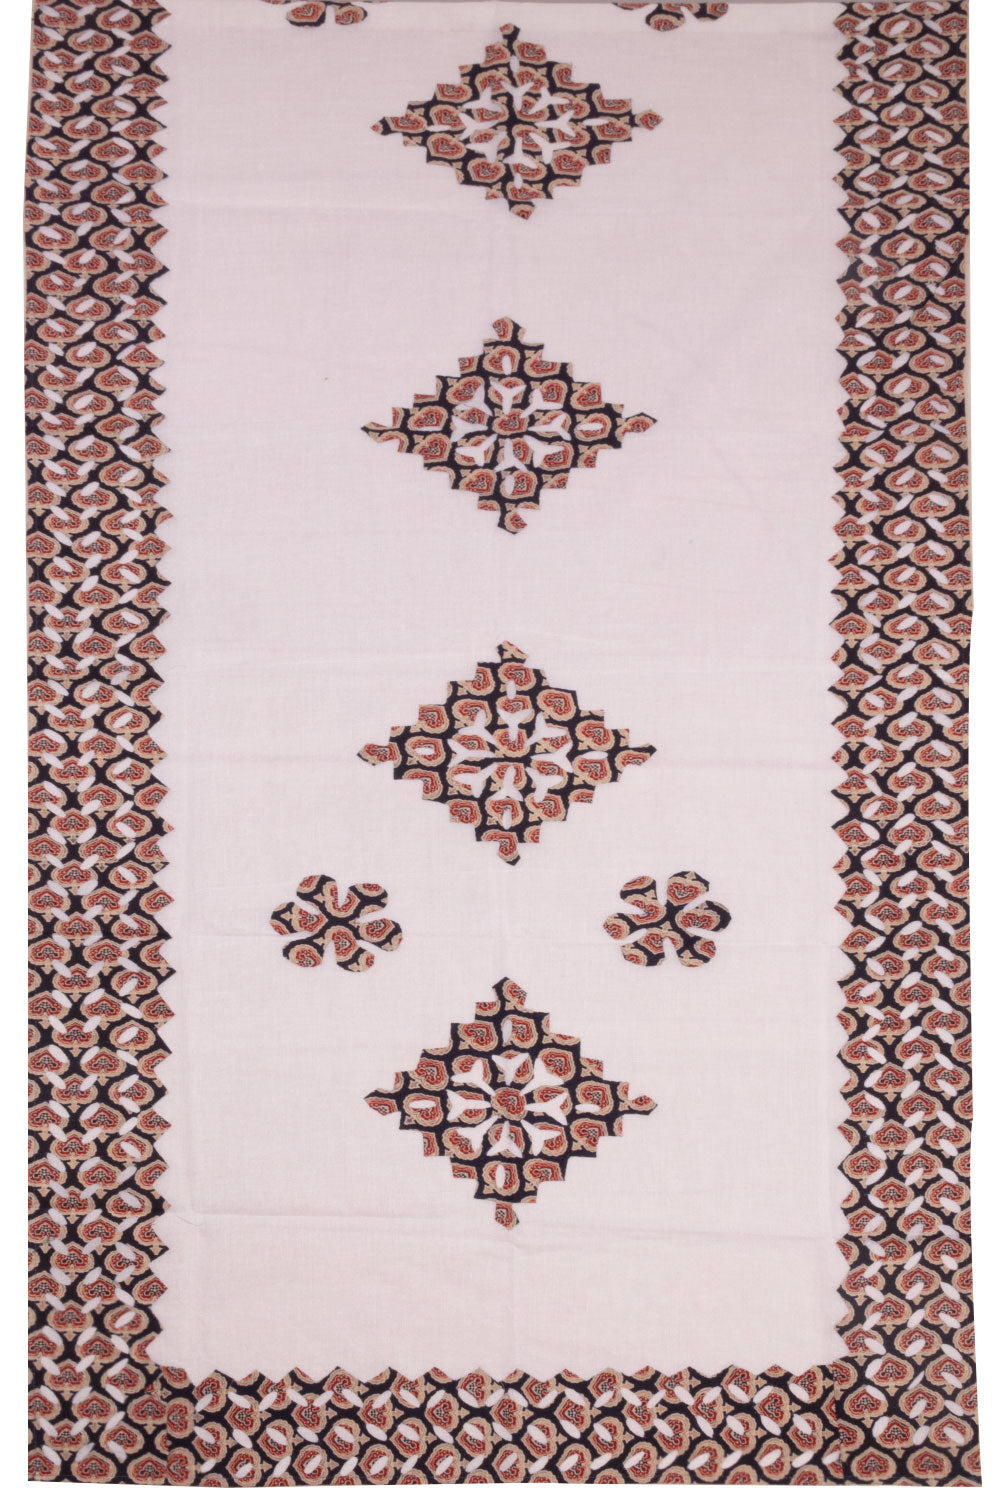 Black Barmer Applique Embroidered Cotton 3 Piece Salwar Suit Material 10070184